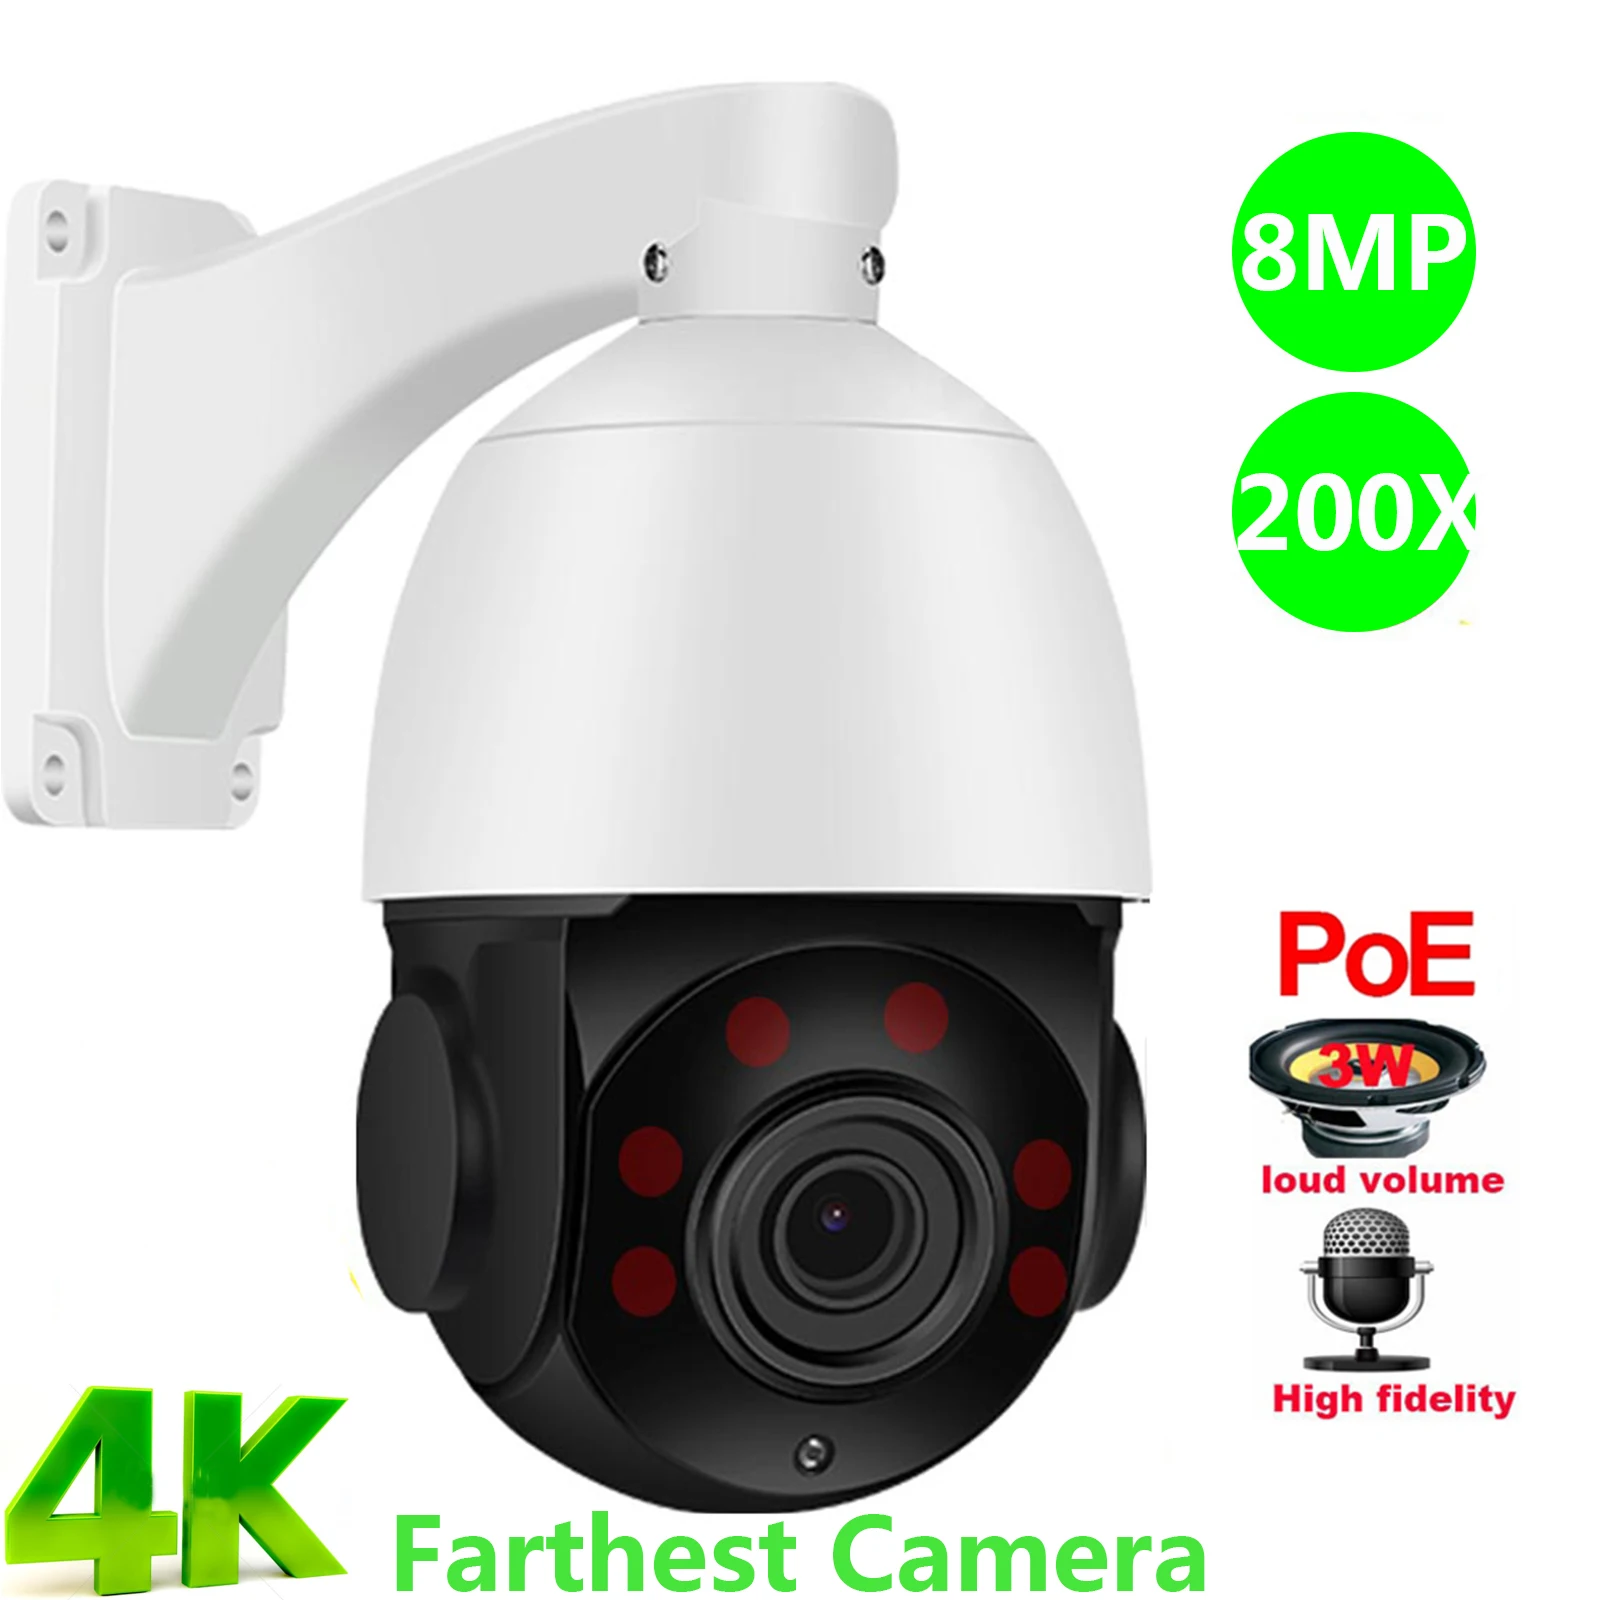 

4K 8MP 200X ZOOM POE Speed Dome PTZ IP Camera Support Hikvision Dahua Protocol IVM4200 P2P ONVIF IMX415 SD 256GB IP Camera